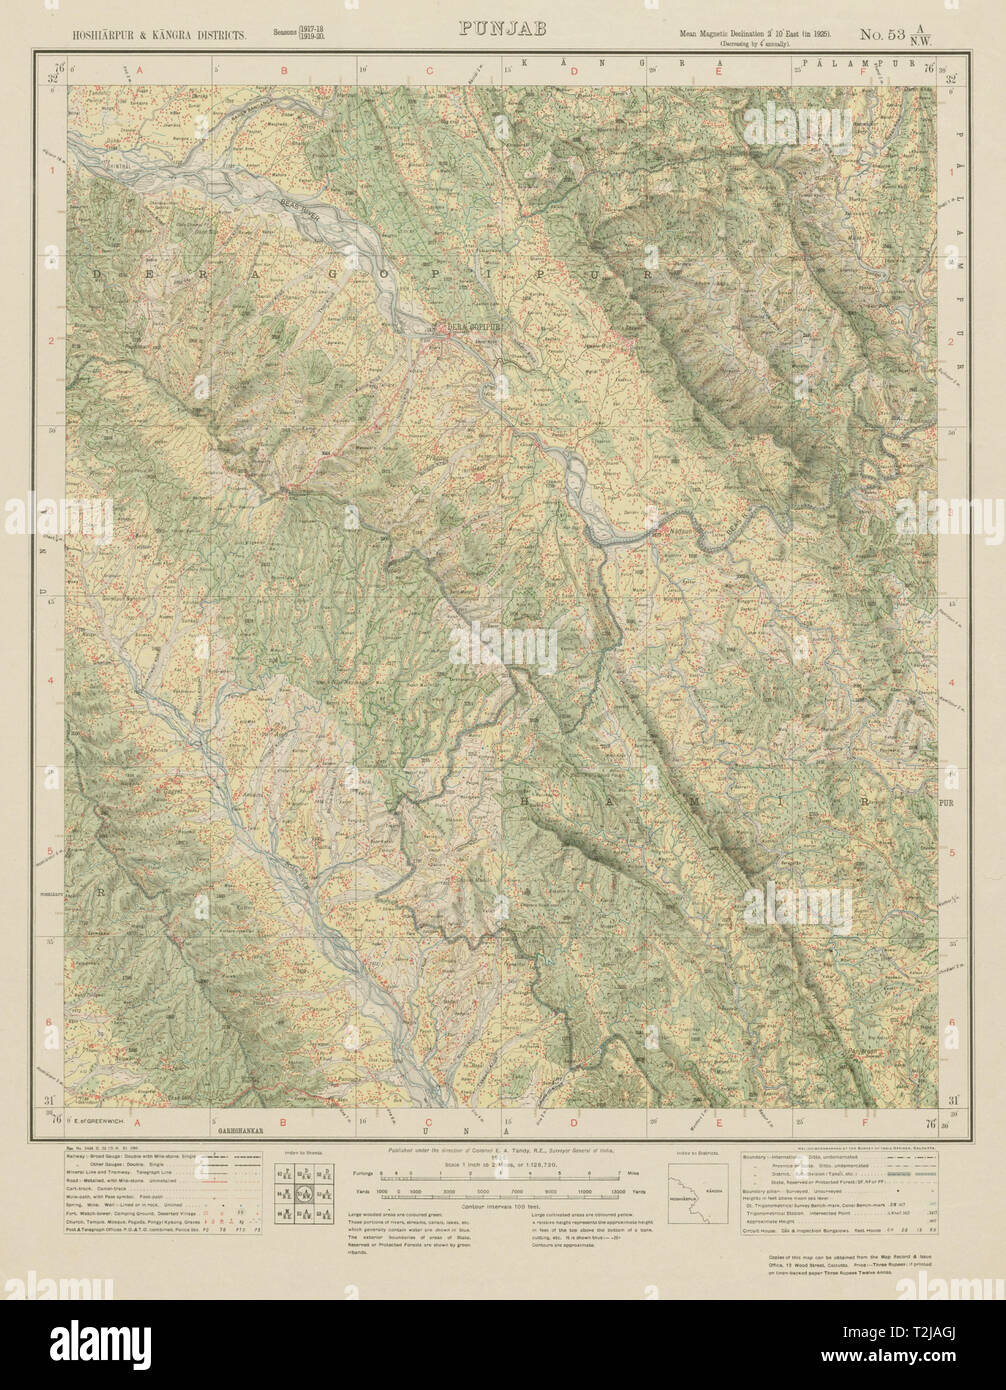 SURVEY OF INDIA 53 A/NW Himachal Pradesh Pragpur Nadaun Jawalamukhi Amb 1925 map Stock Photo